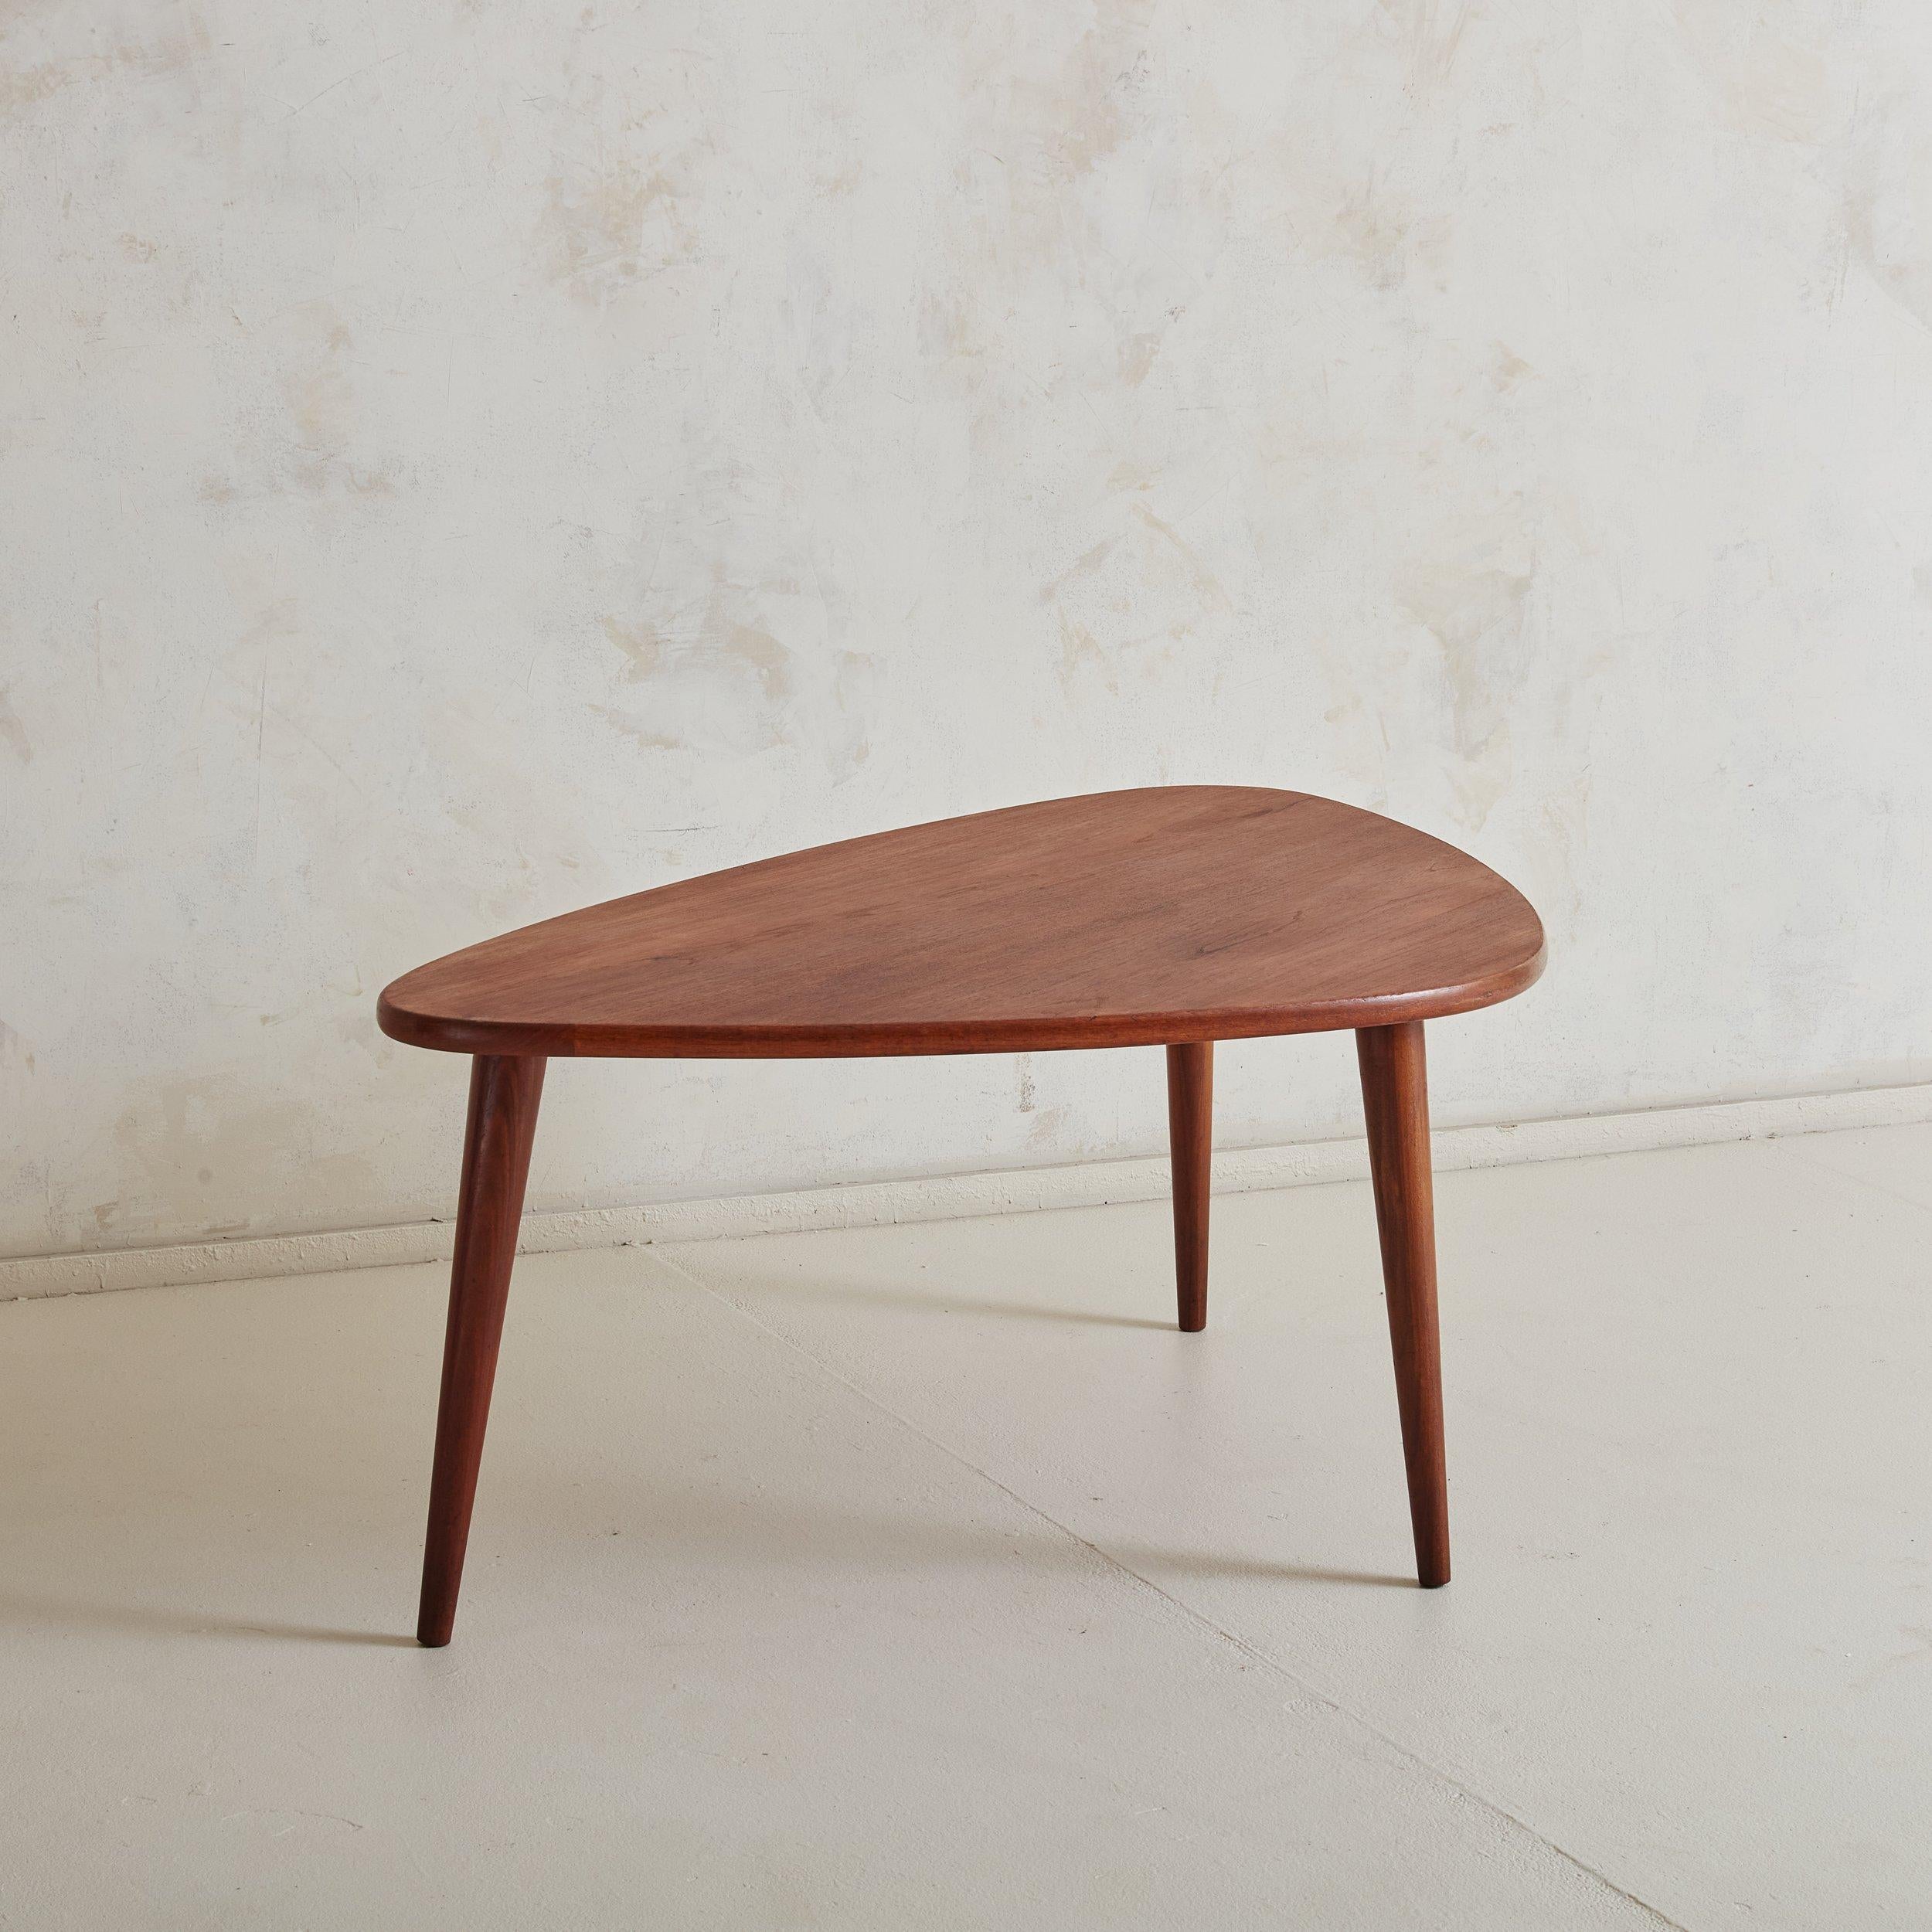 Scandinavian Modern Danish Modern Organic Form Coffee Table, Mid 20th Century For Sale